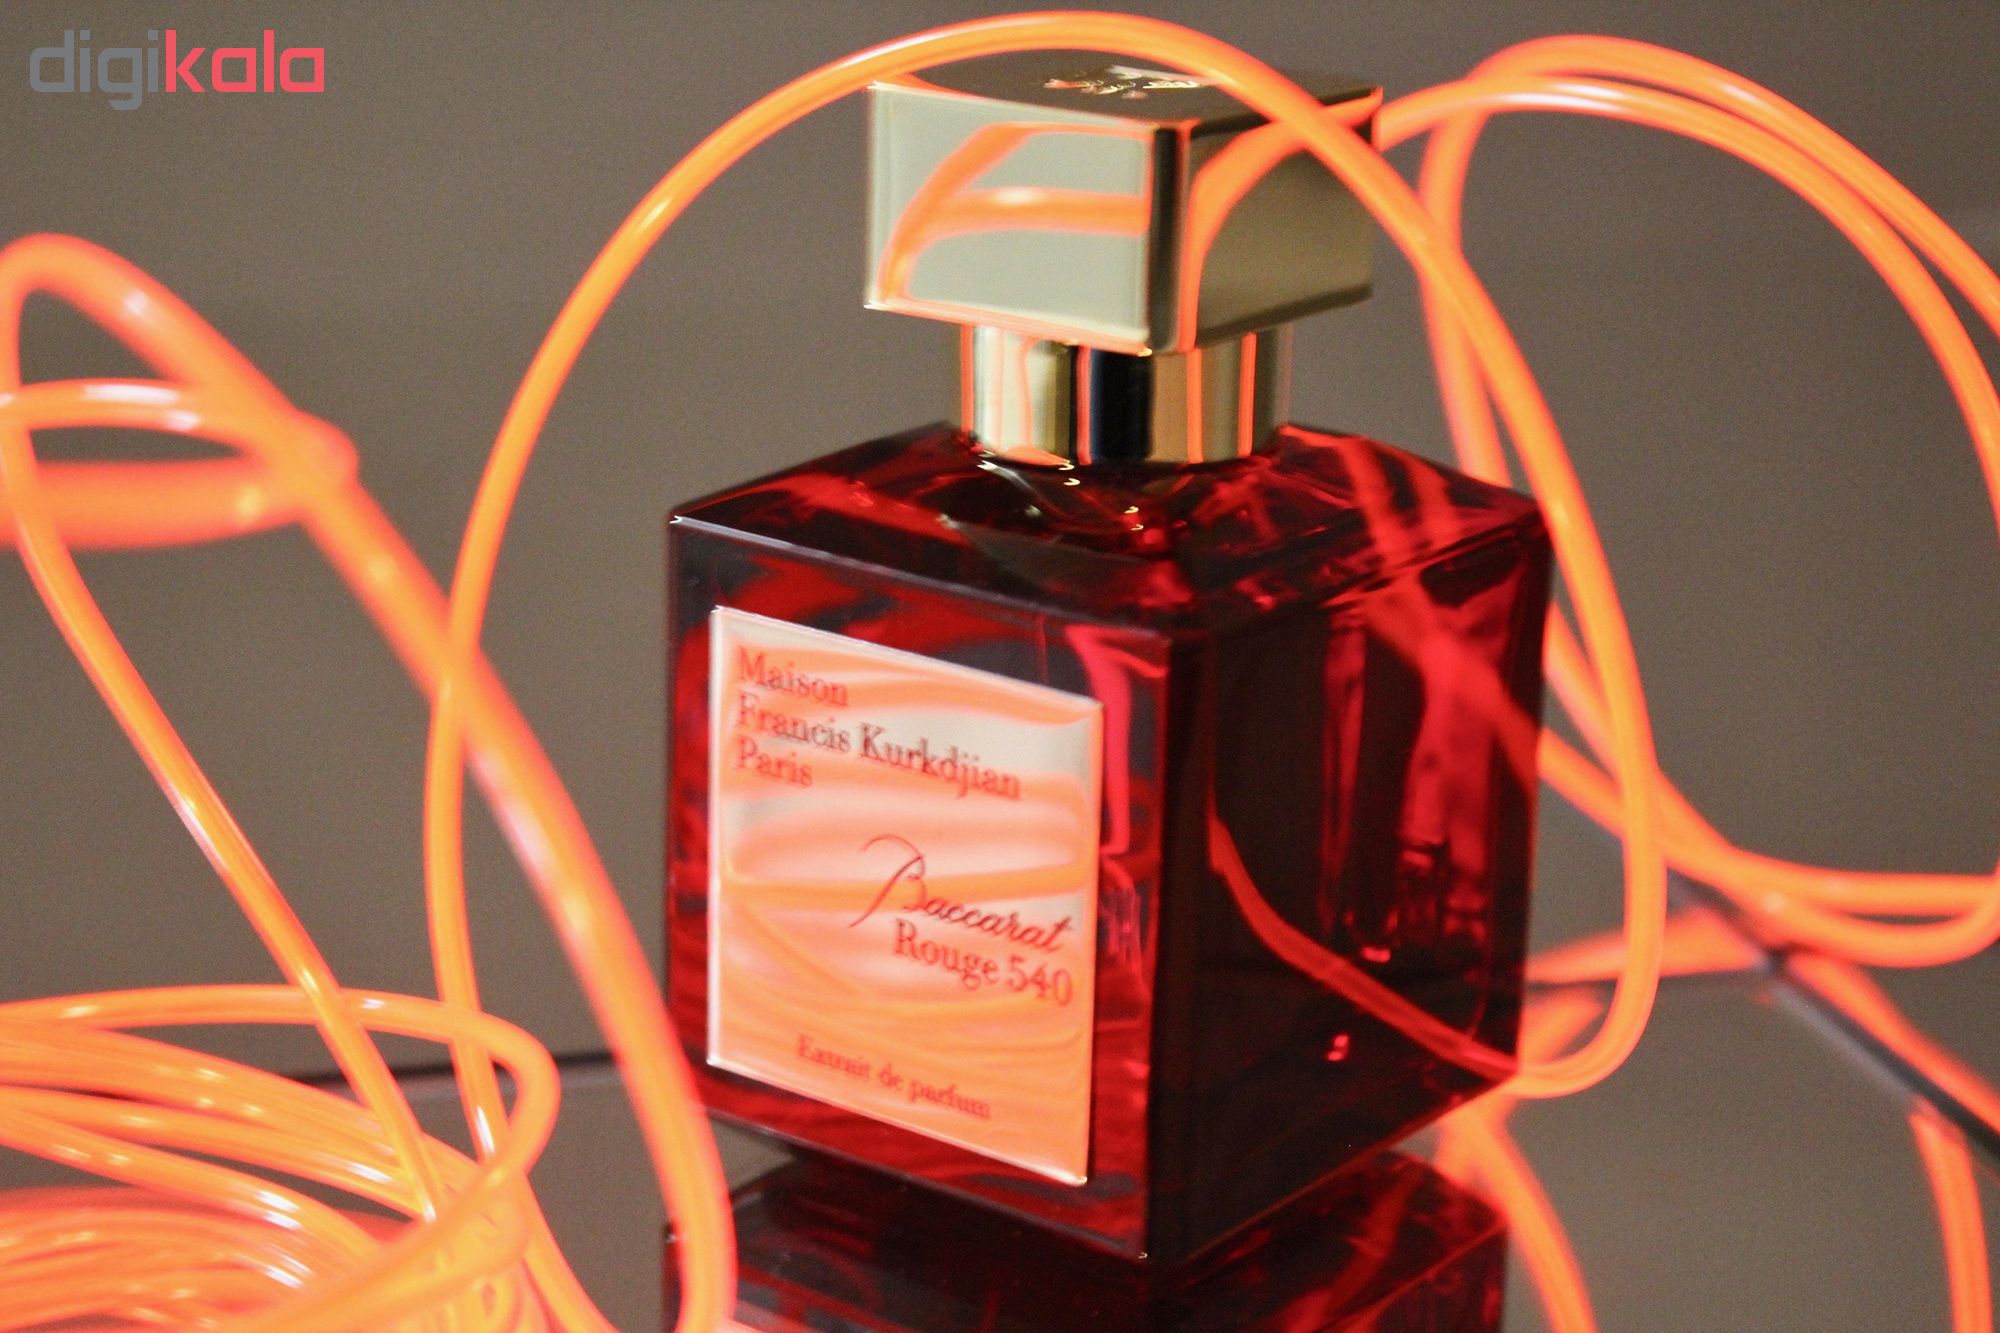 پرفیوم میسون فرانسیس کورکجان مدل Baccarat Rouge 540 Extrait de Parfum حجم 70 میلی لیتر